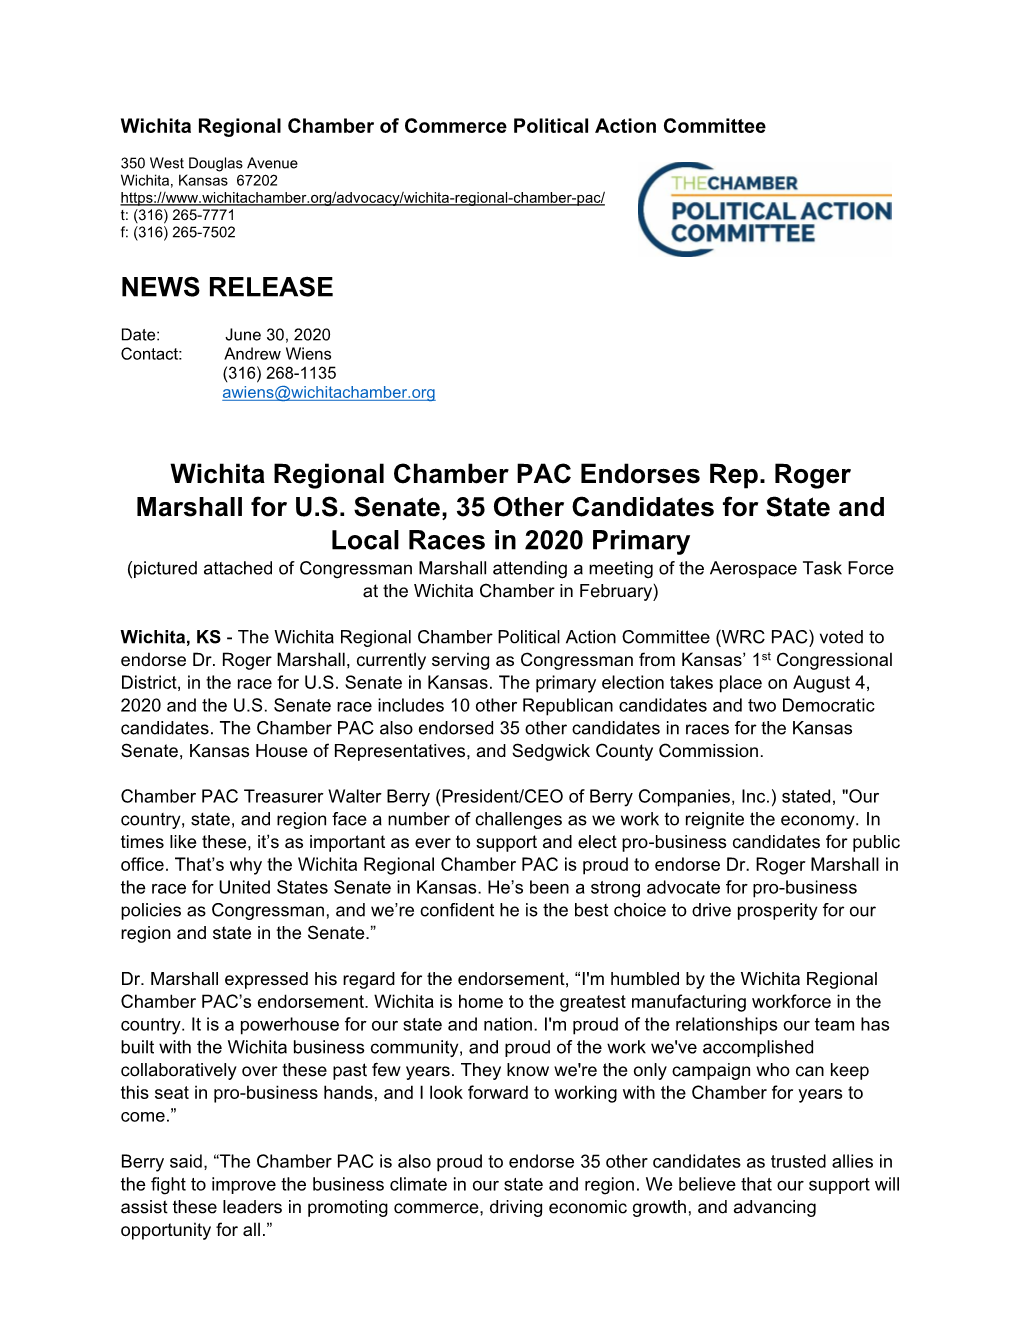 Wichita Regional Chamber PAC Endorses Rep. Roger Marshall for U.S